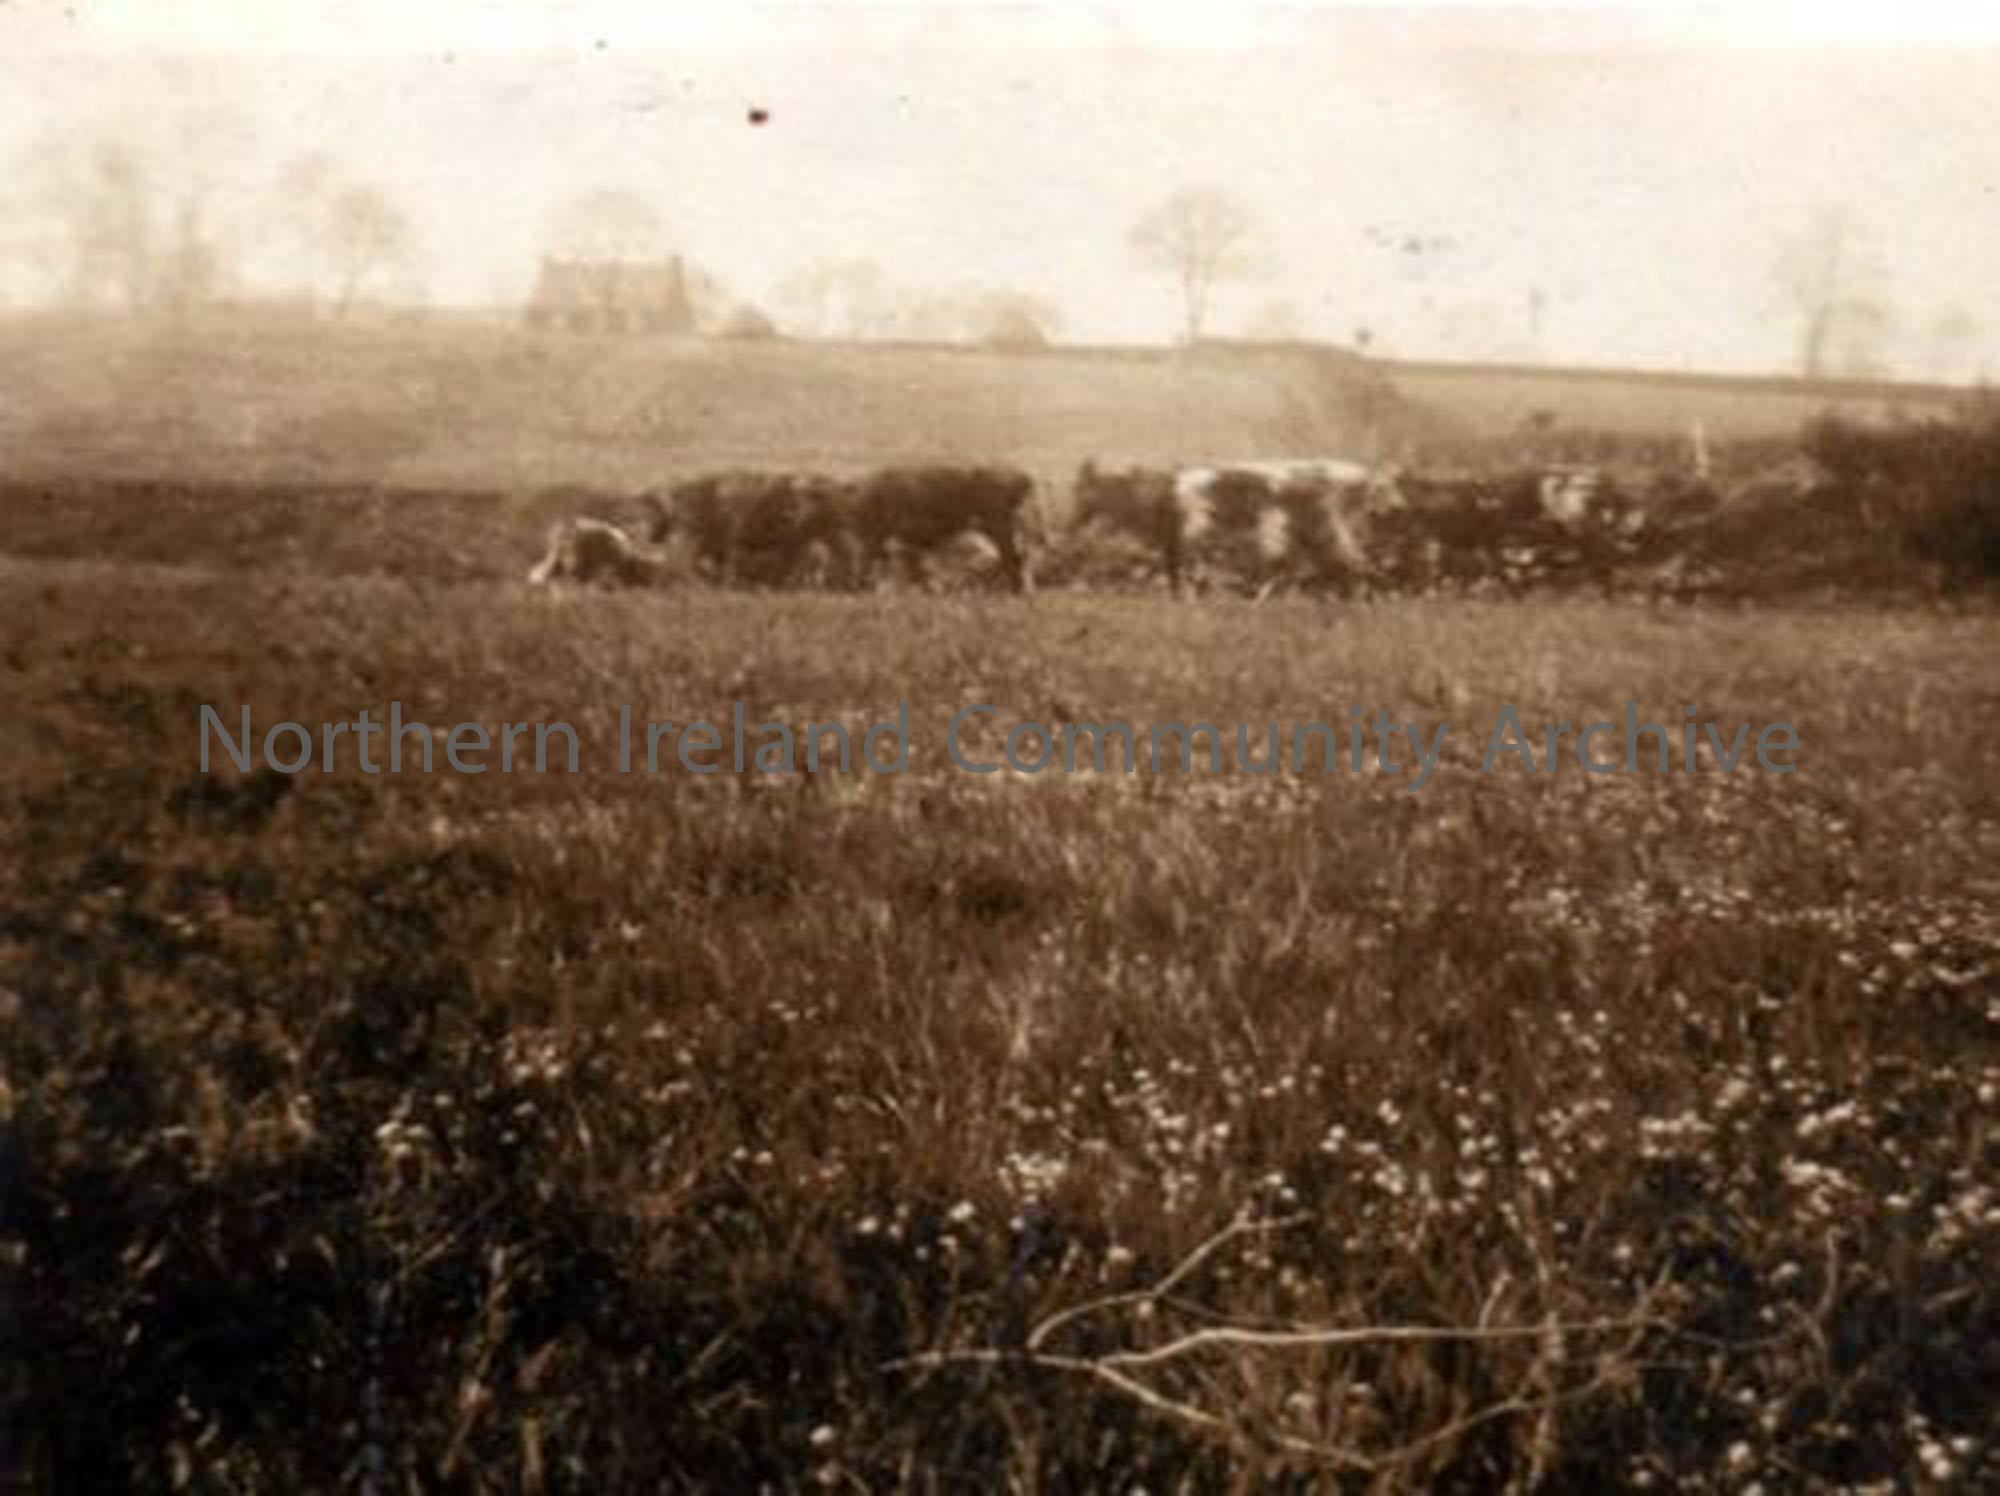 Cattle on the Smyth’s farm